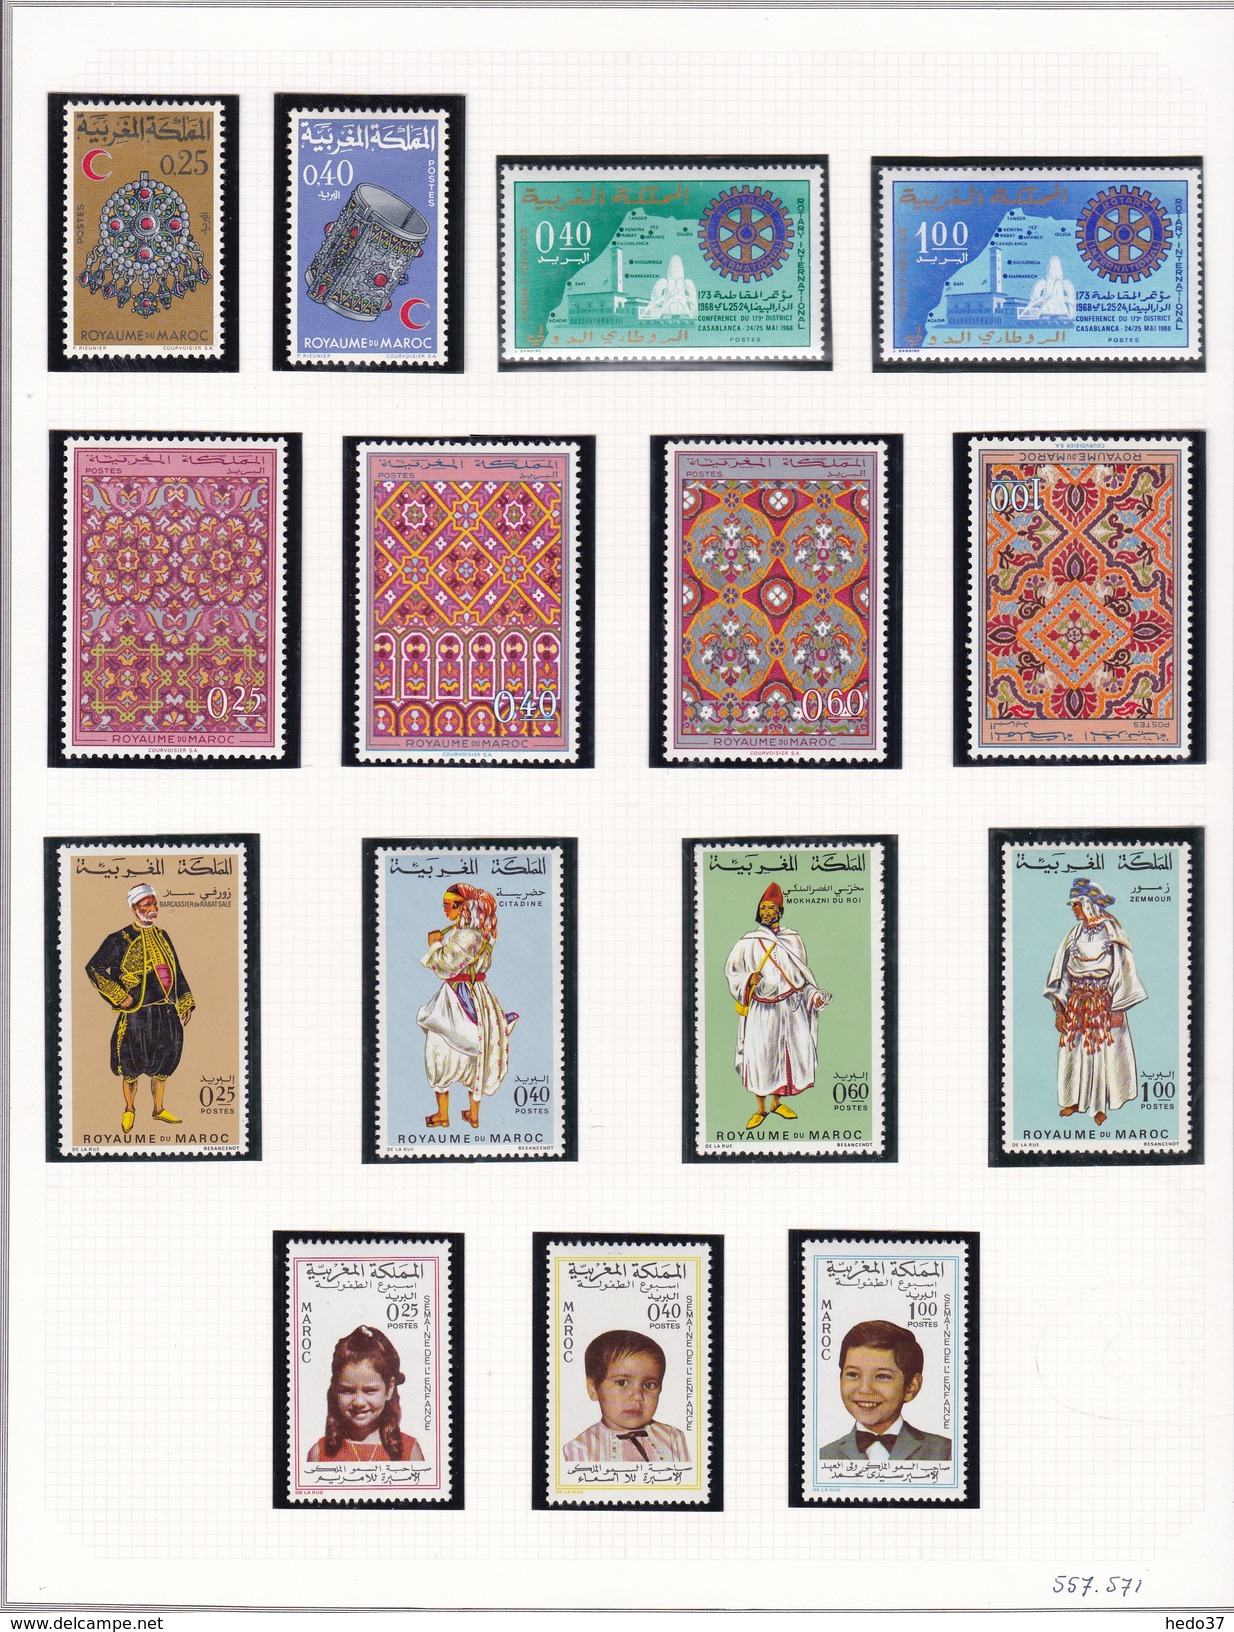 Maroc - Collection Vendue Page Par Page - Timbres Neufs ** - TB - Marokko (1956-...)